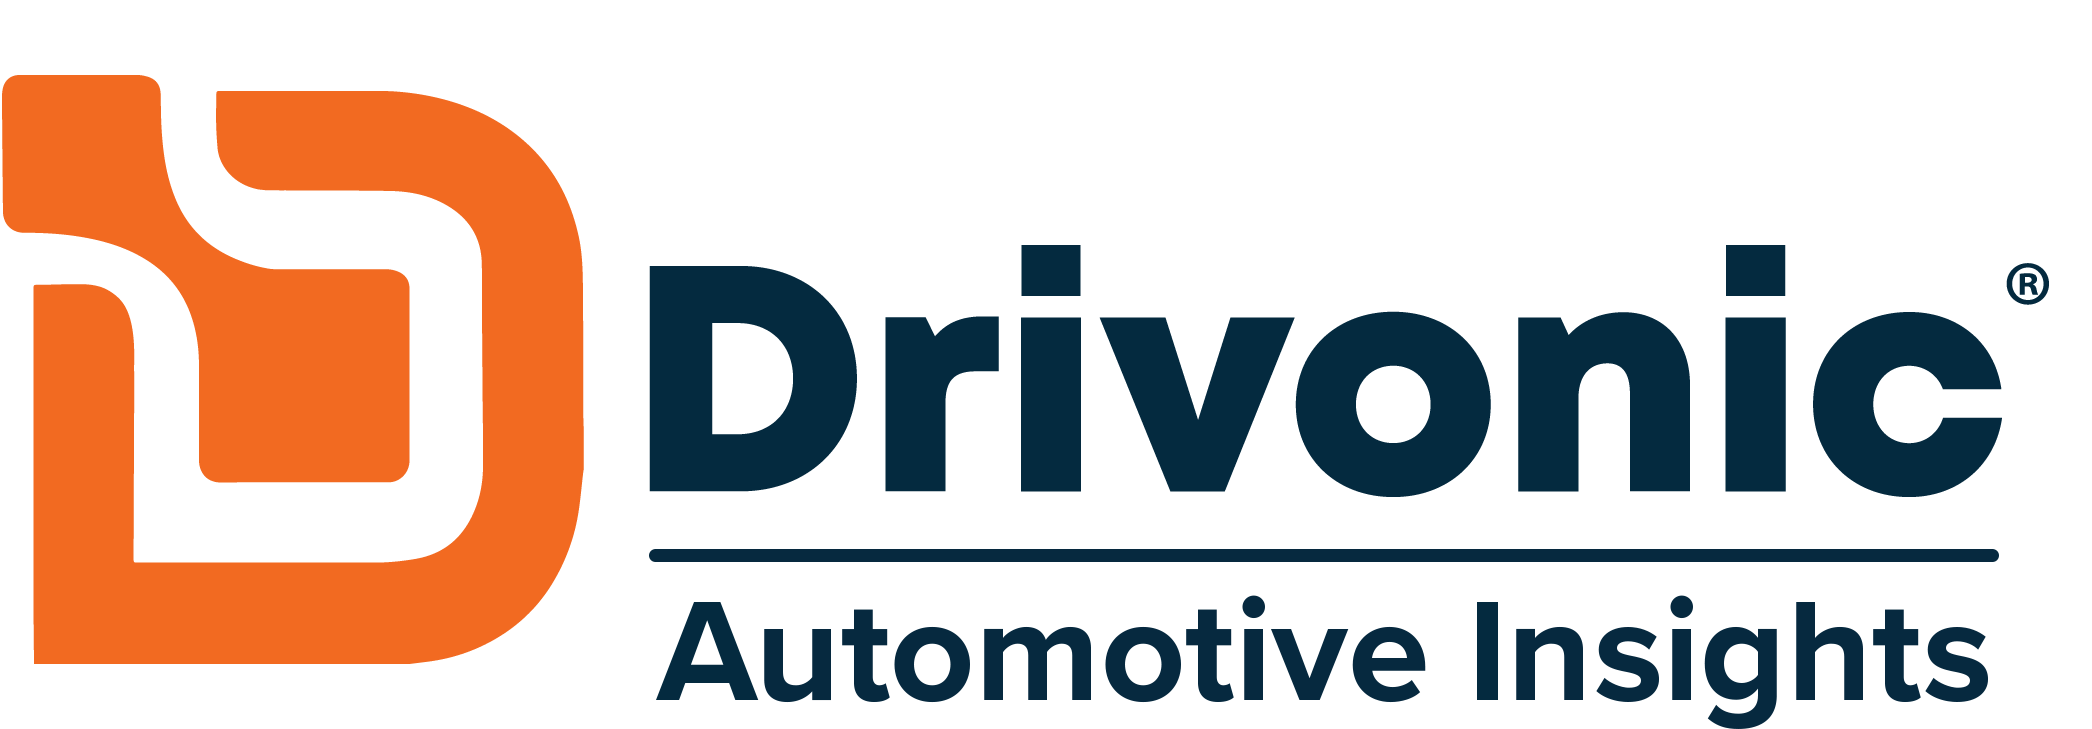 Drivonic Logo - Primary AutoMotive Insights-1